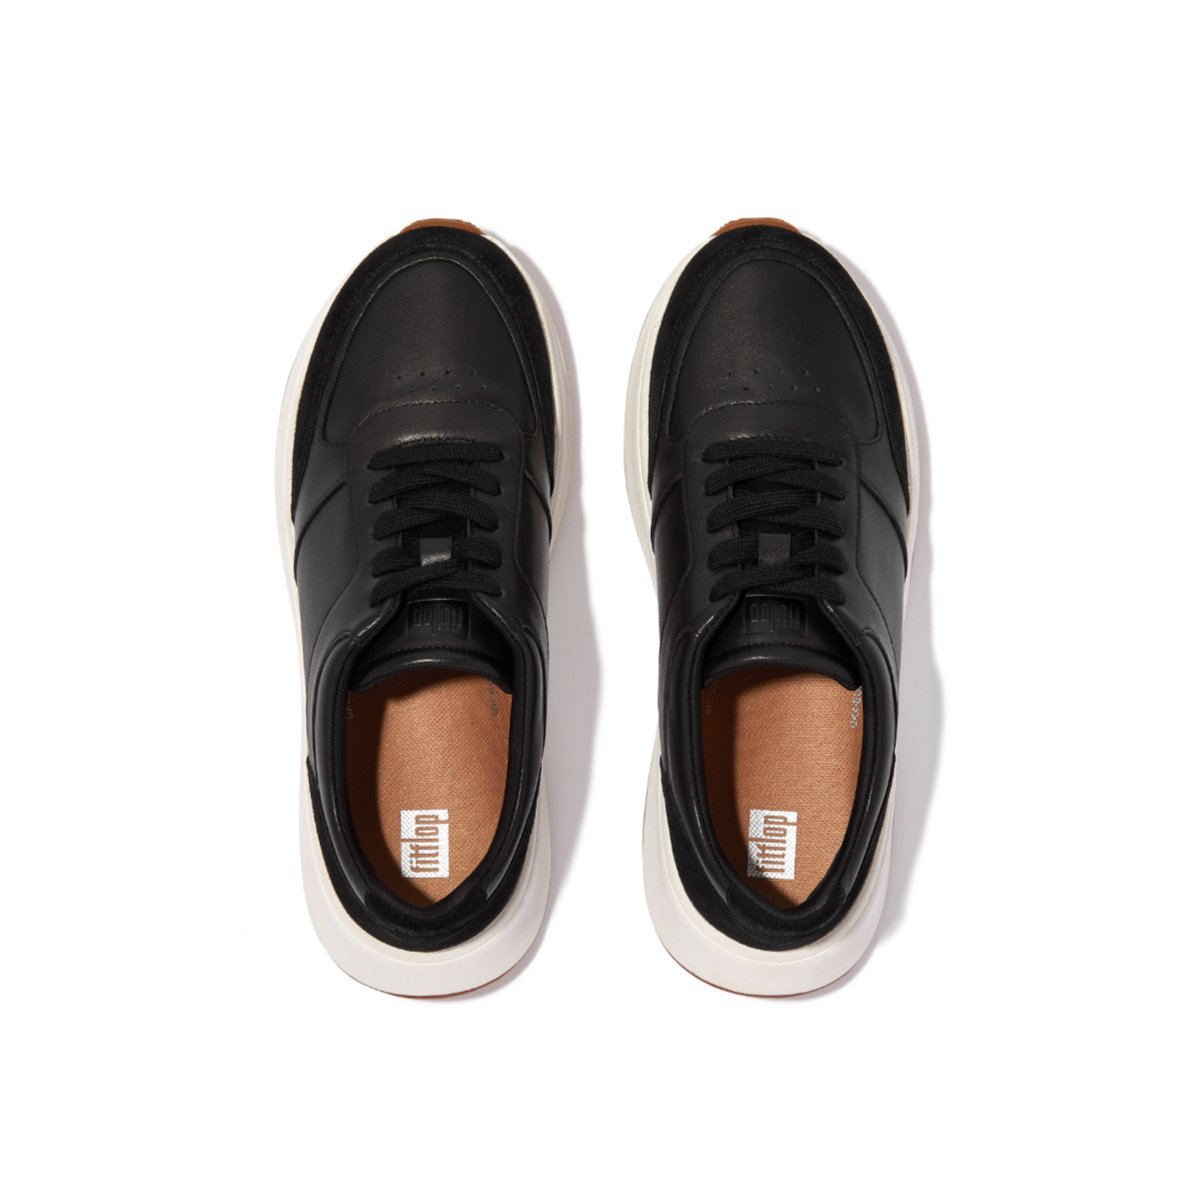 F-MODE Women's Leather Suede Flatform Sneakers - Black (FR1-001)